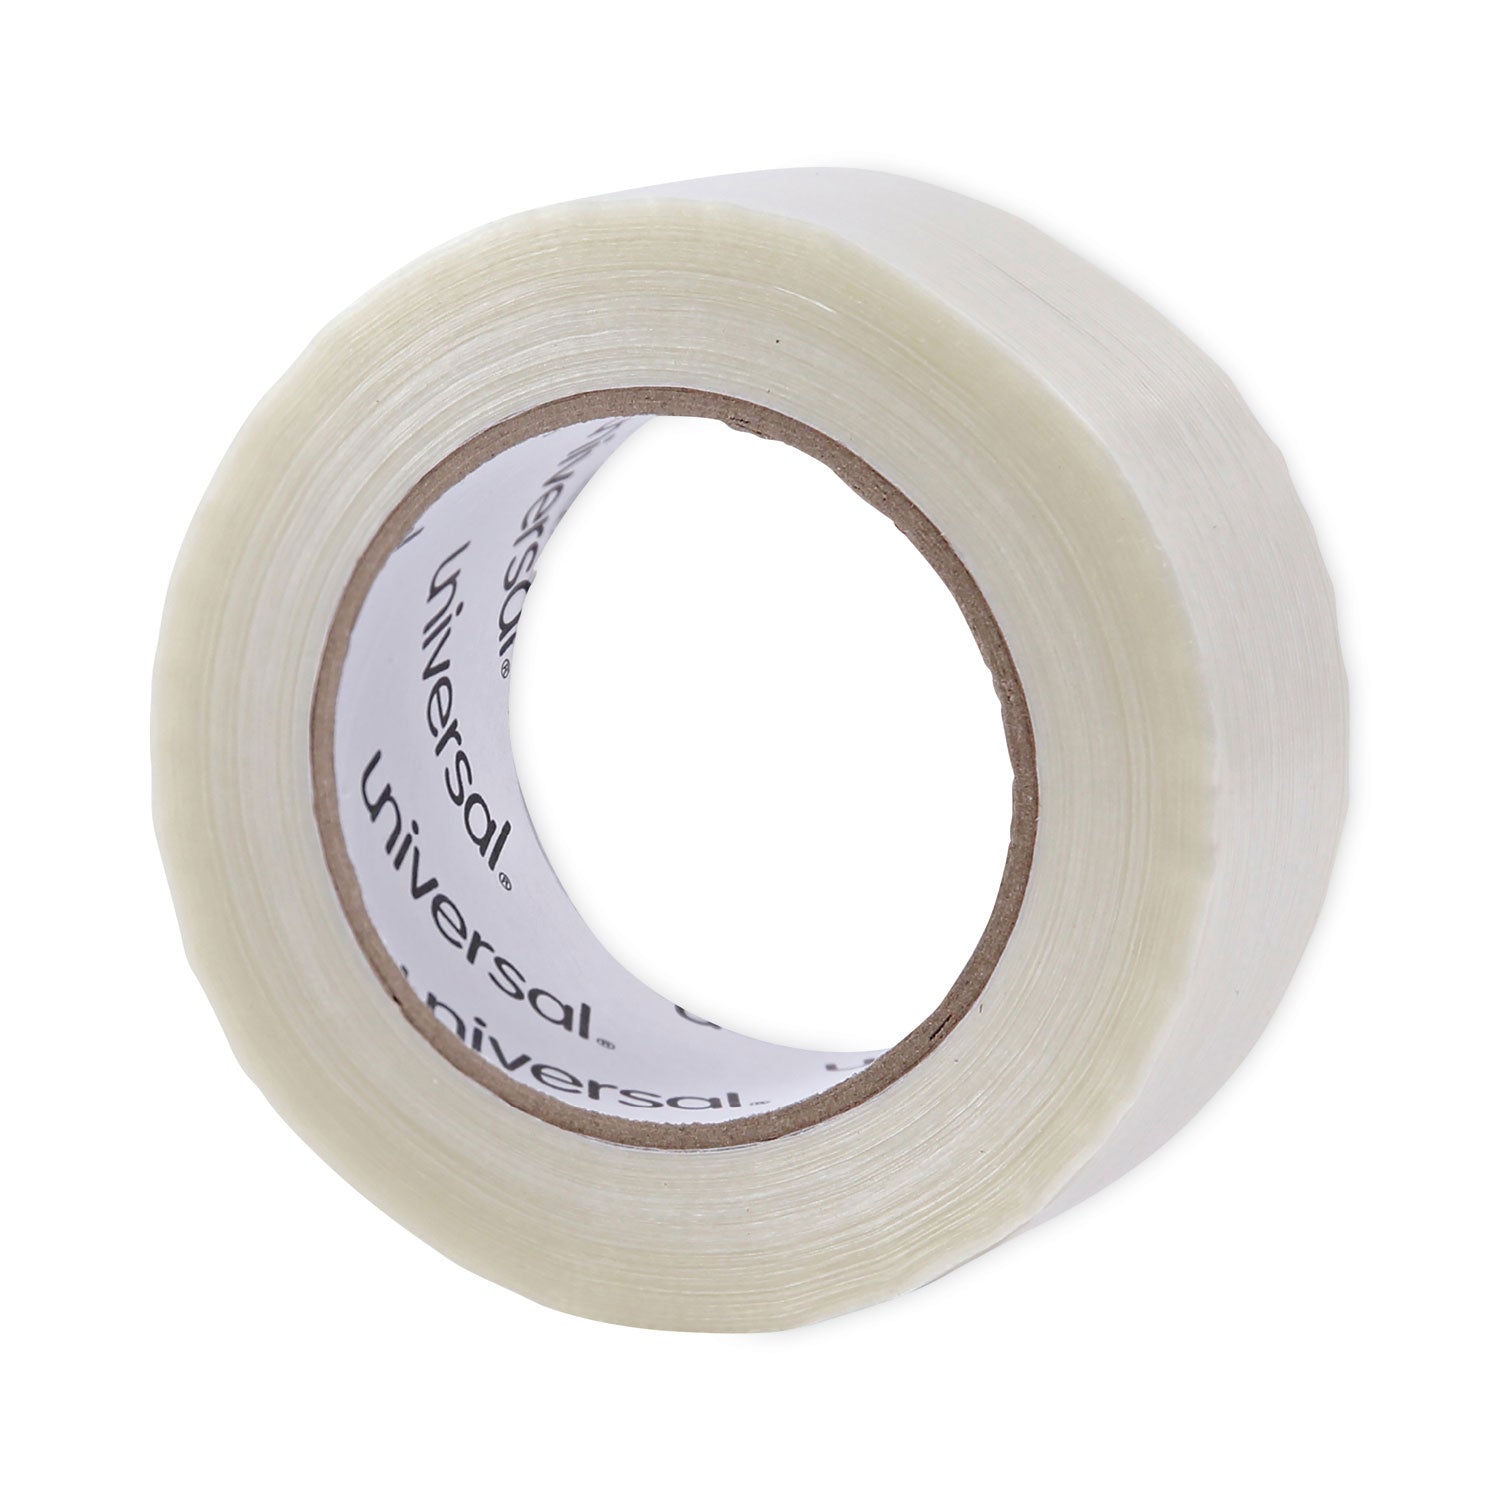 120# Utility Grade Filament Tape, 3" Core, 48 mm x 54.8 m, Clear - 